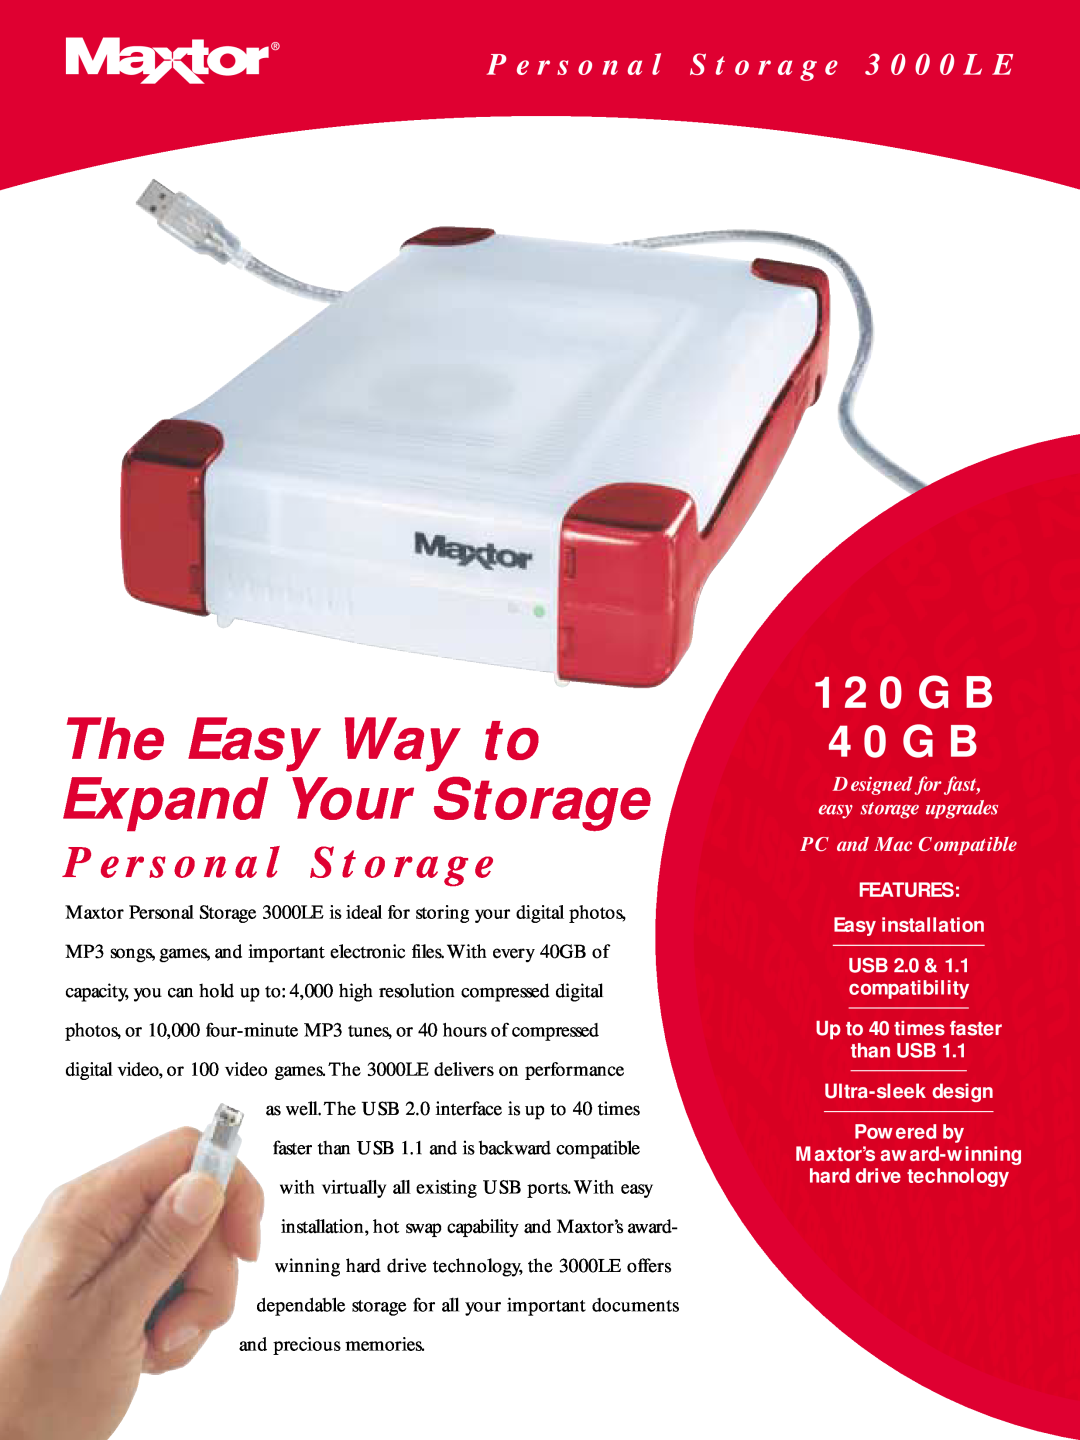 Maxtor X01USB2040, X01USB2120, 3000LE manual The Easy Way to Expand Your Storage, P e r s o n a l S t o r a g e, 120GB 40GB 